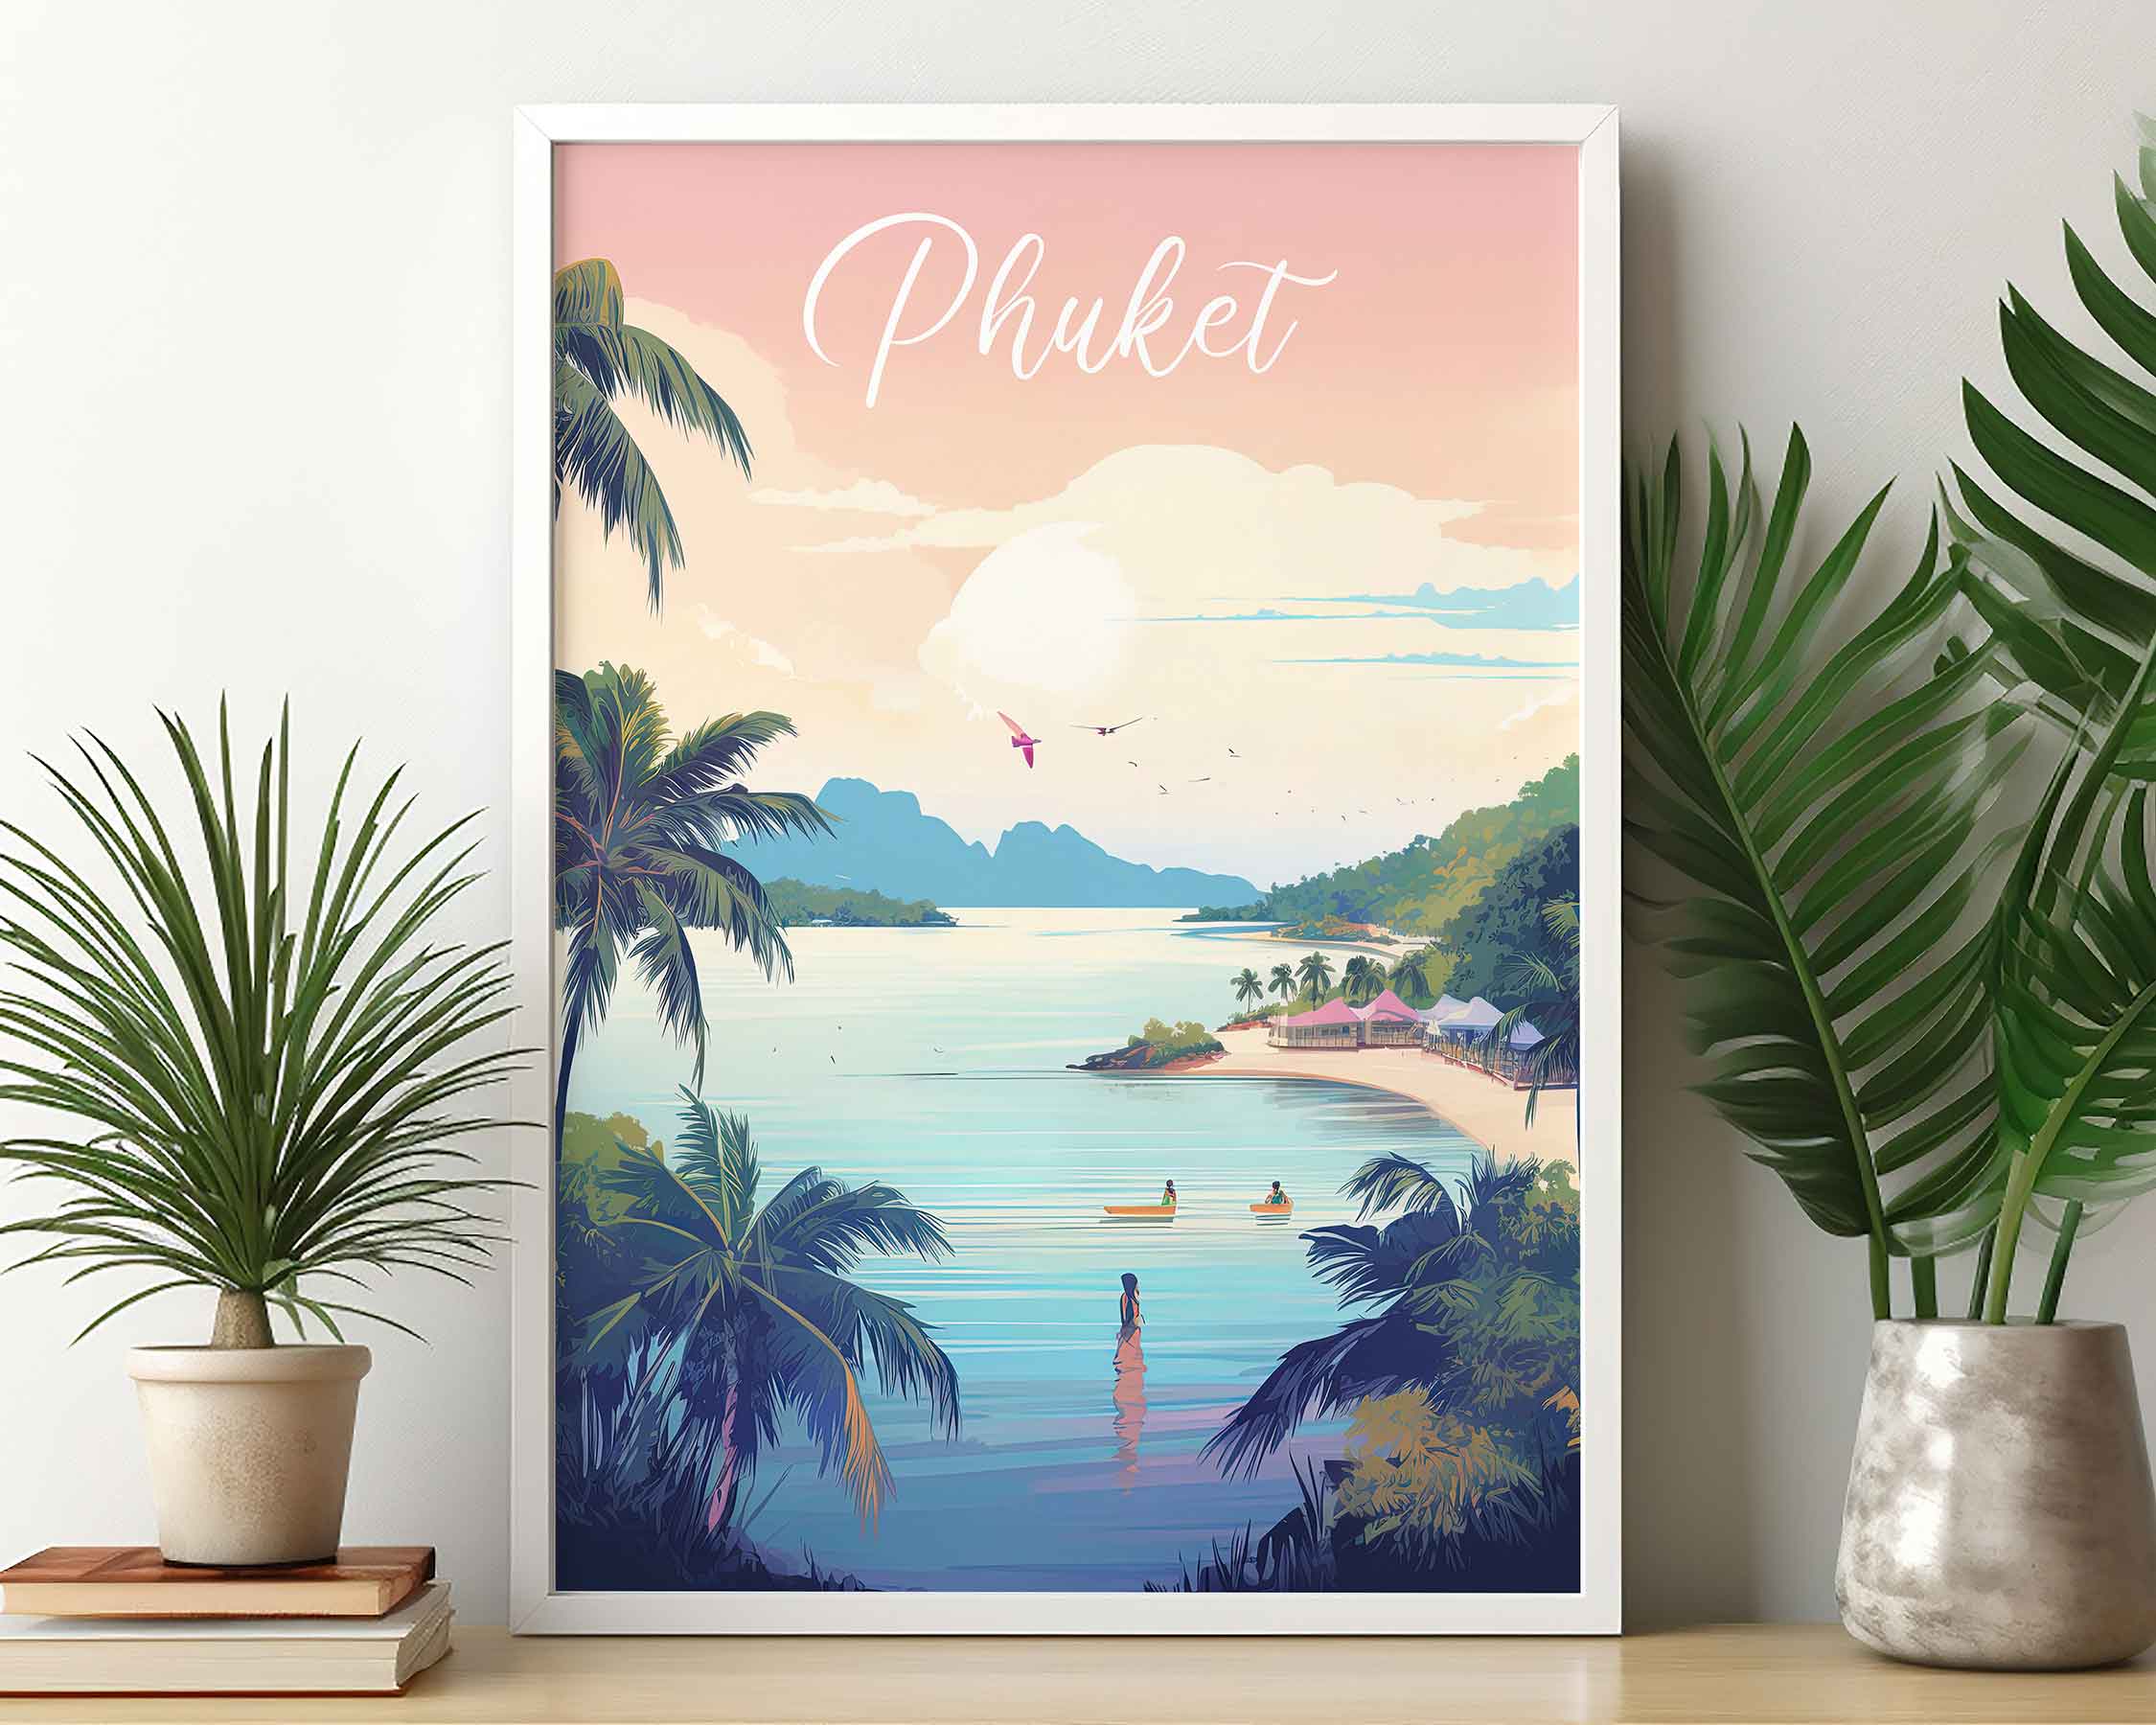 Framed Image of Phuket Thailand Travel Poster Illustration Prints Wall Art